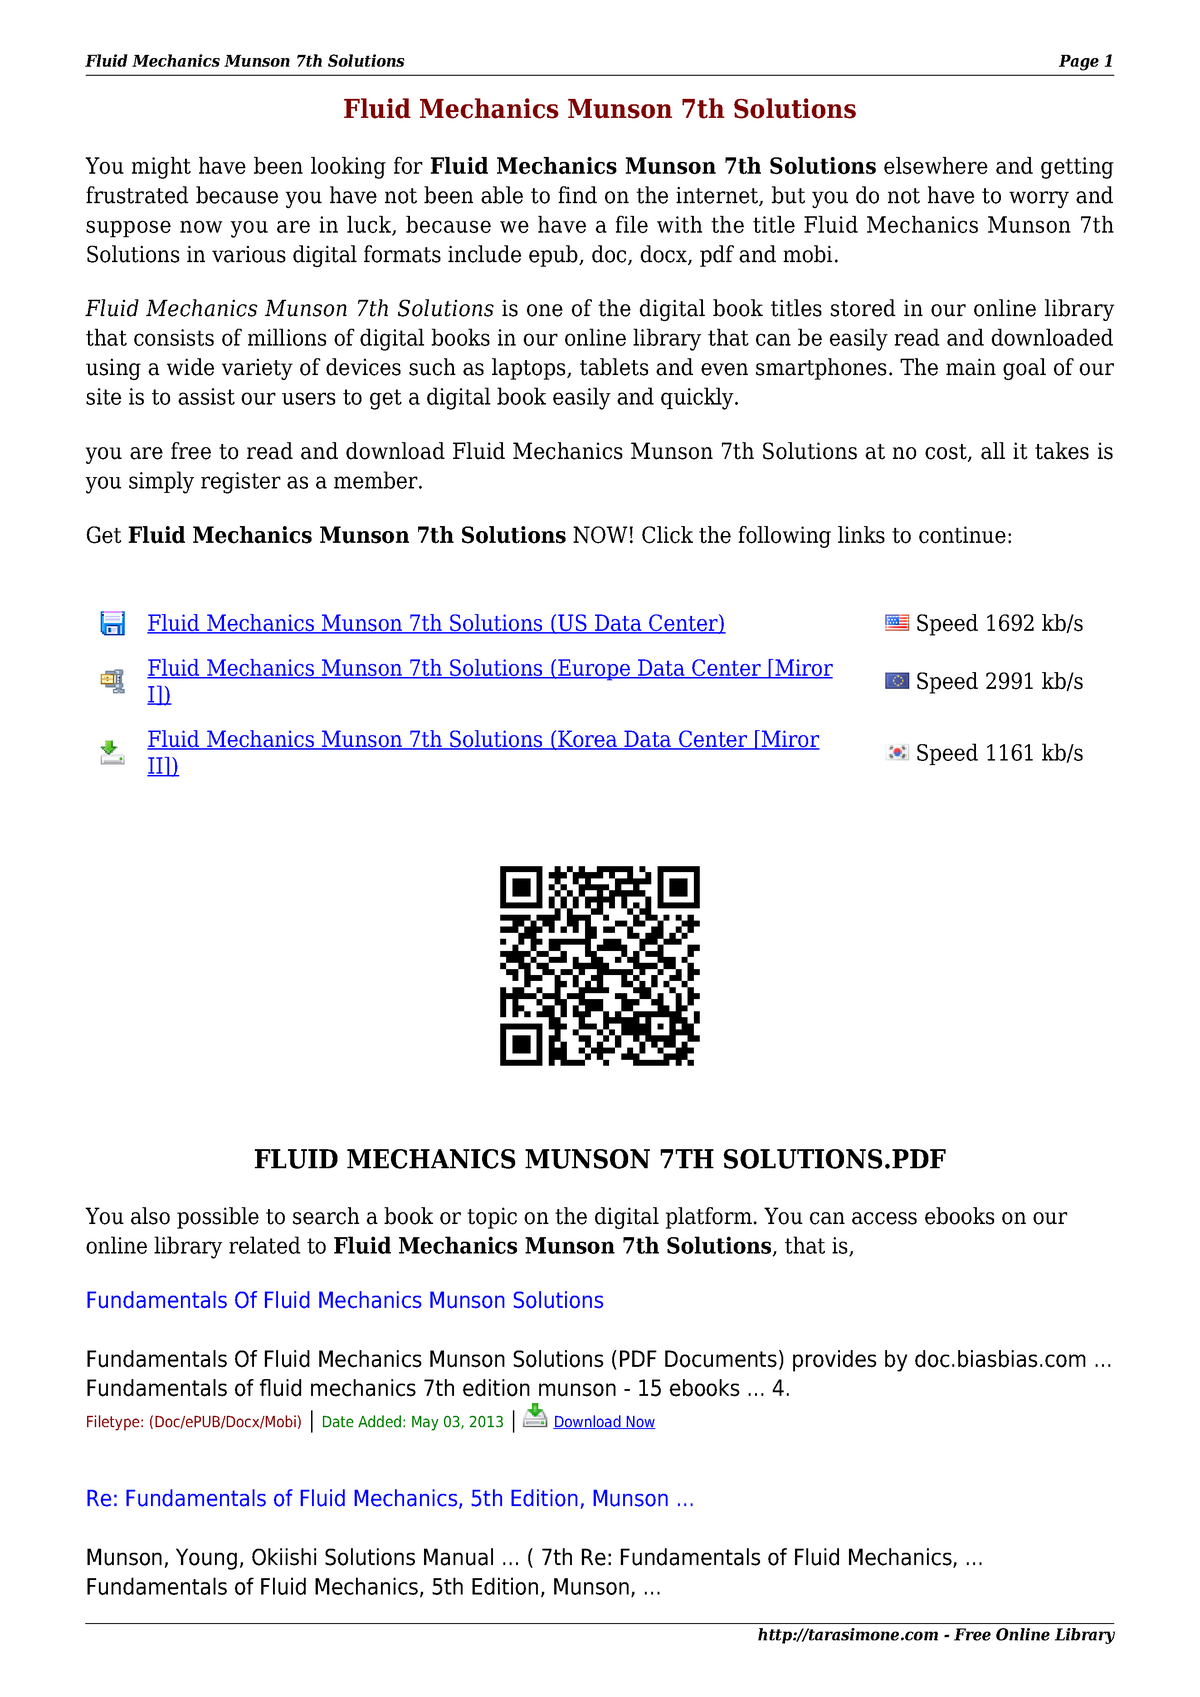 Fundamentals of fluid mechanics 5th edition pdf answers